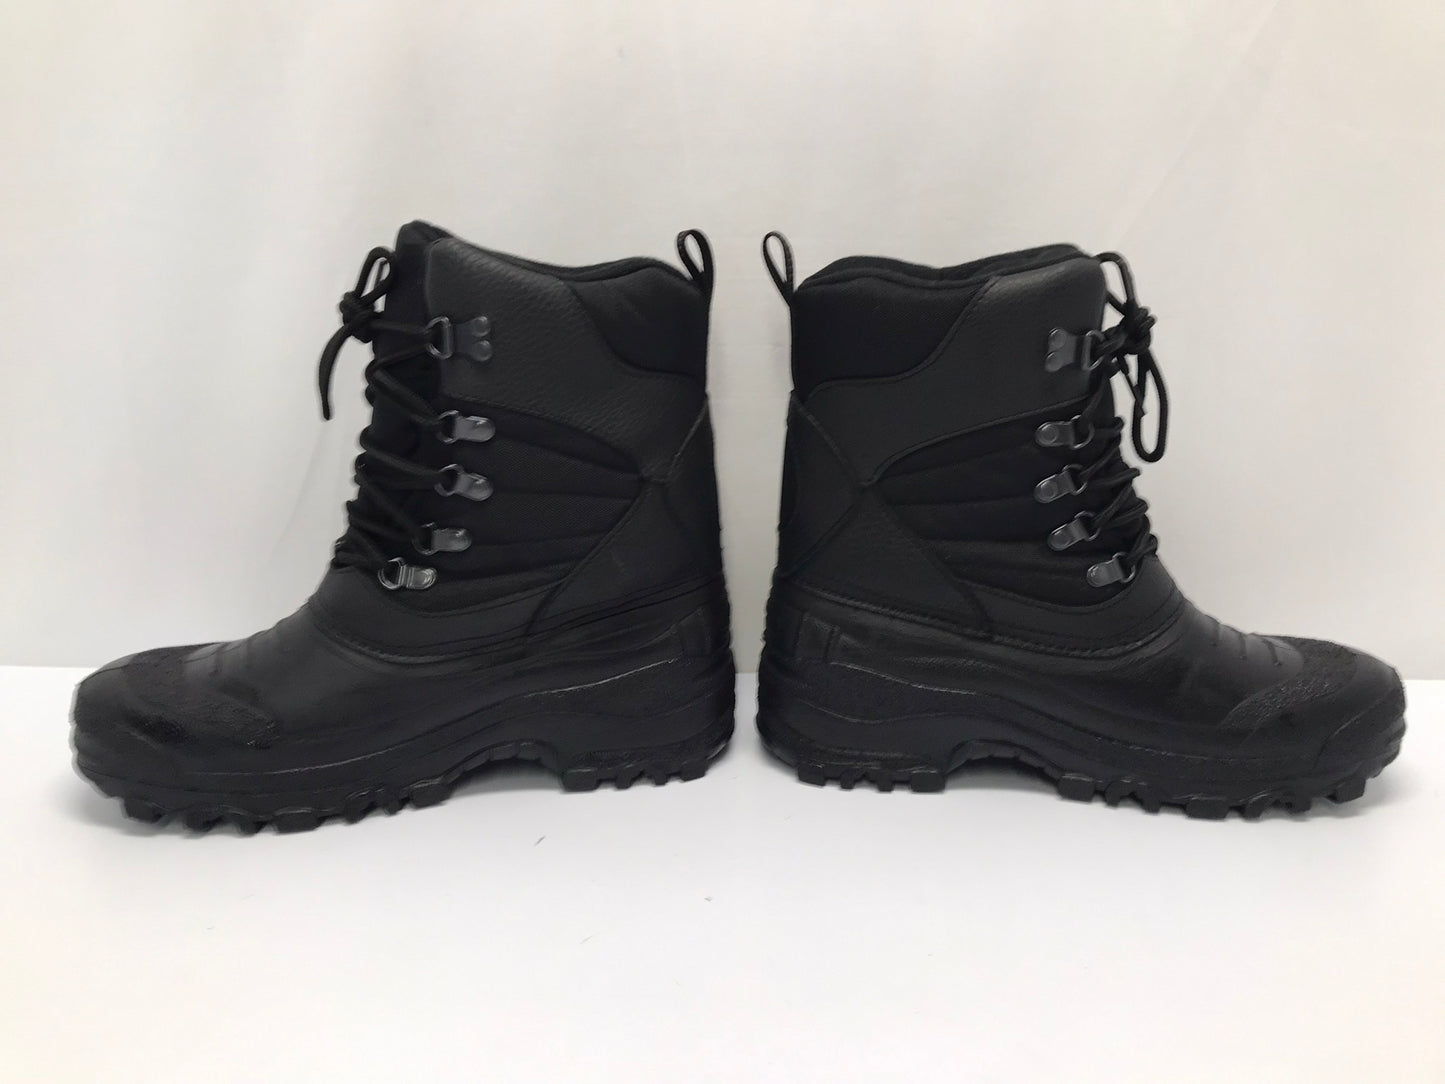 Winter Boots Men's Size 10 Arctic Ridge Black New Demo Model